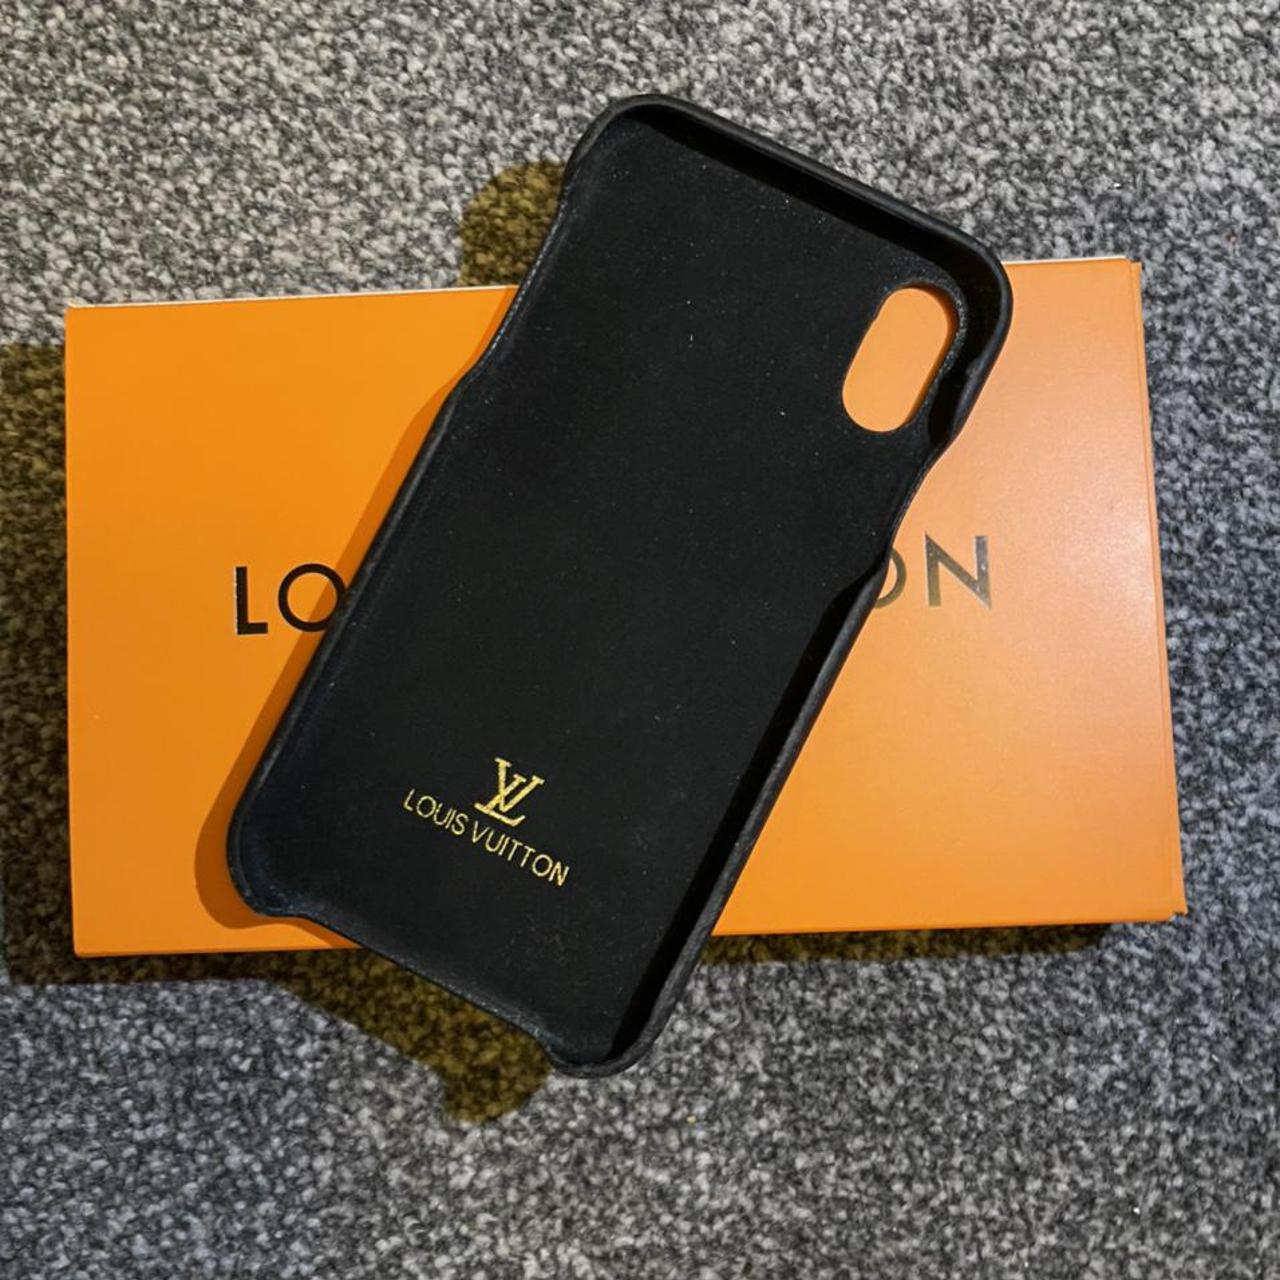 Case for iPhone XS Max - Louis Vuitton Black